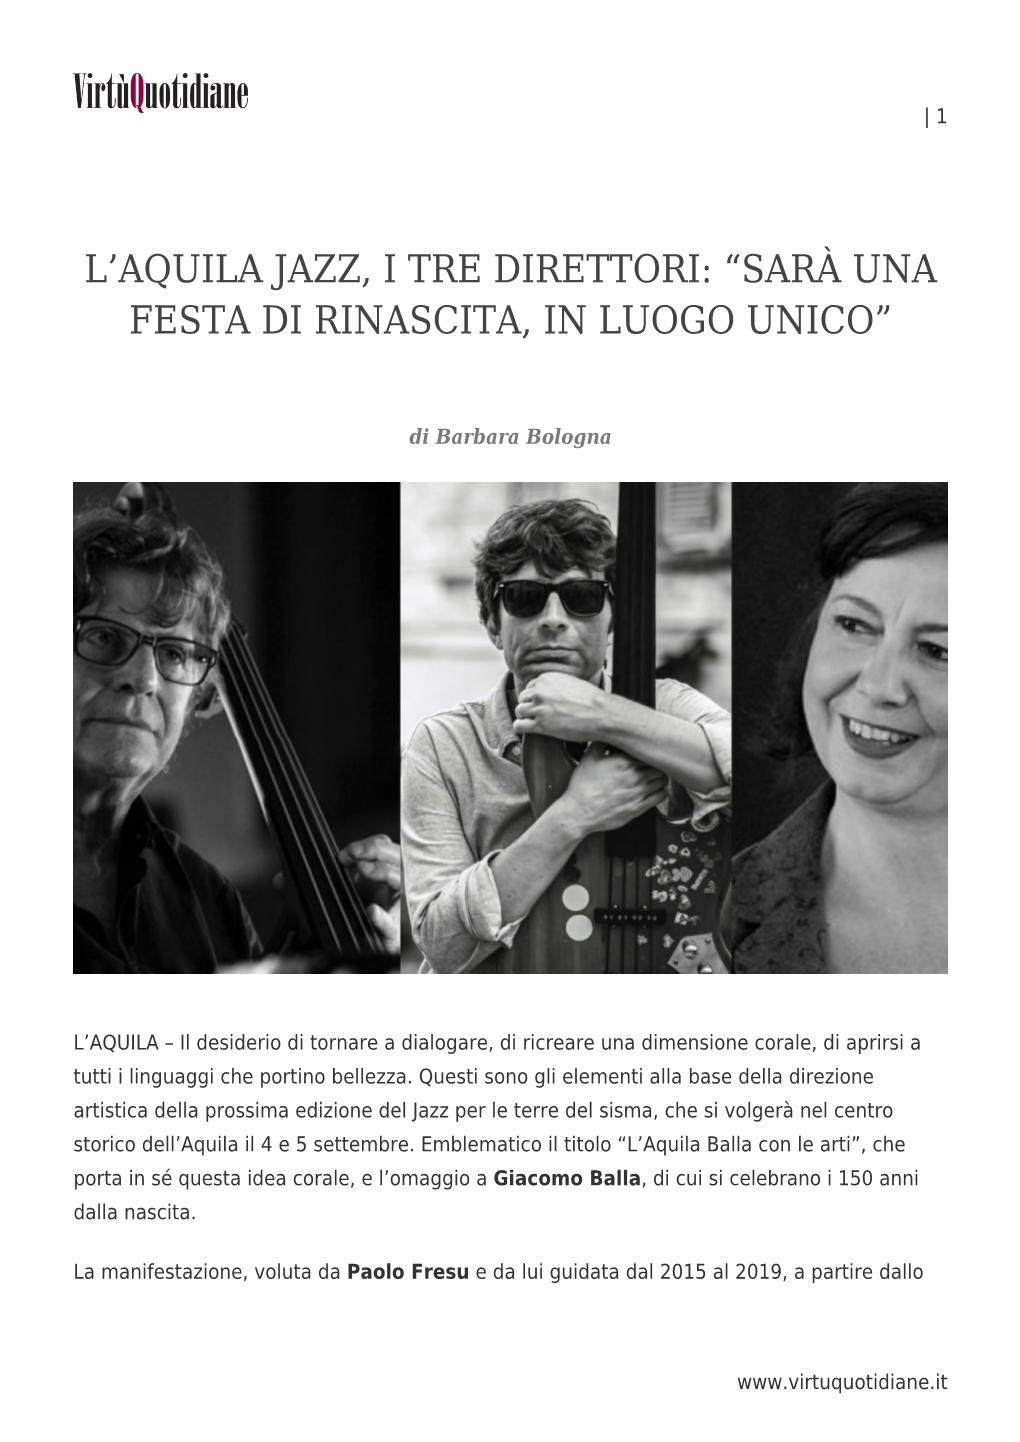 Aquila Jazz, I Tre Direttori: “Sarà Una Festa Di Rinascita, in Luogo Unico”